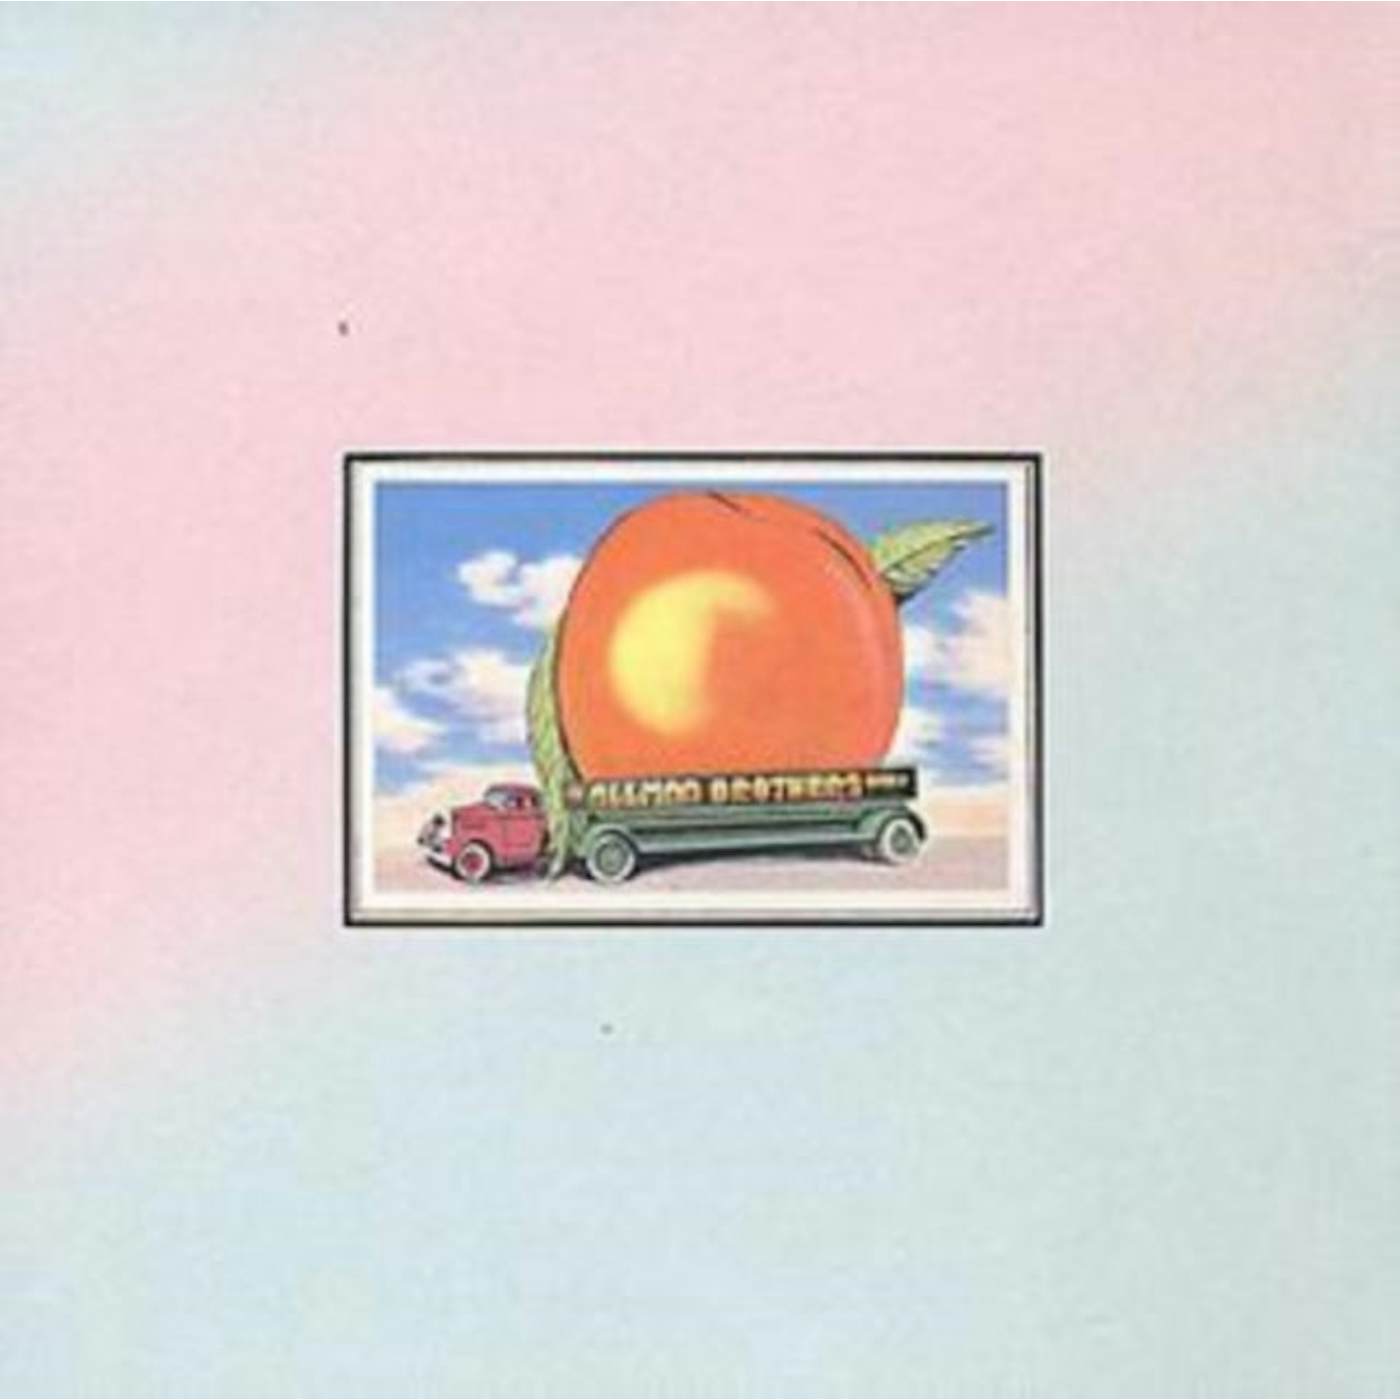 Allman Brothers Band CD - Eat A Peach